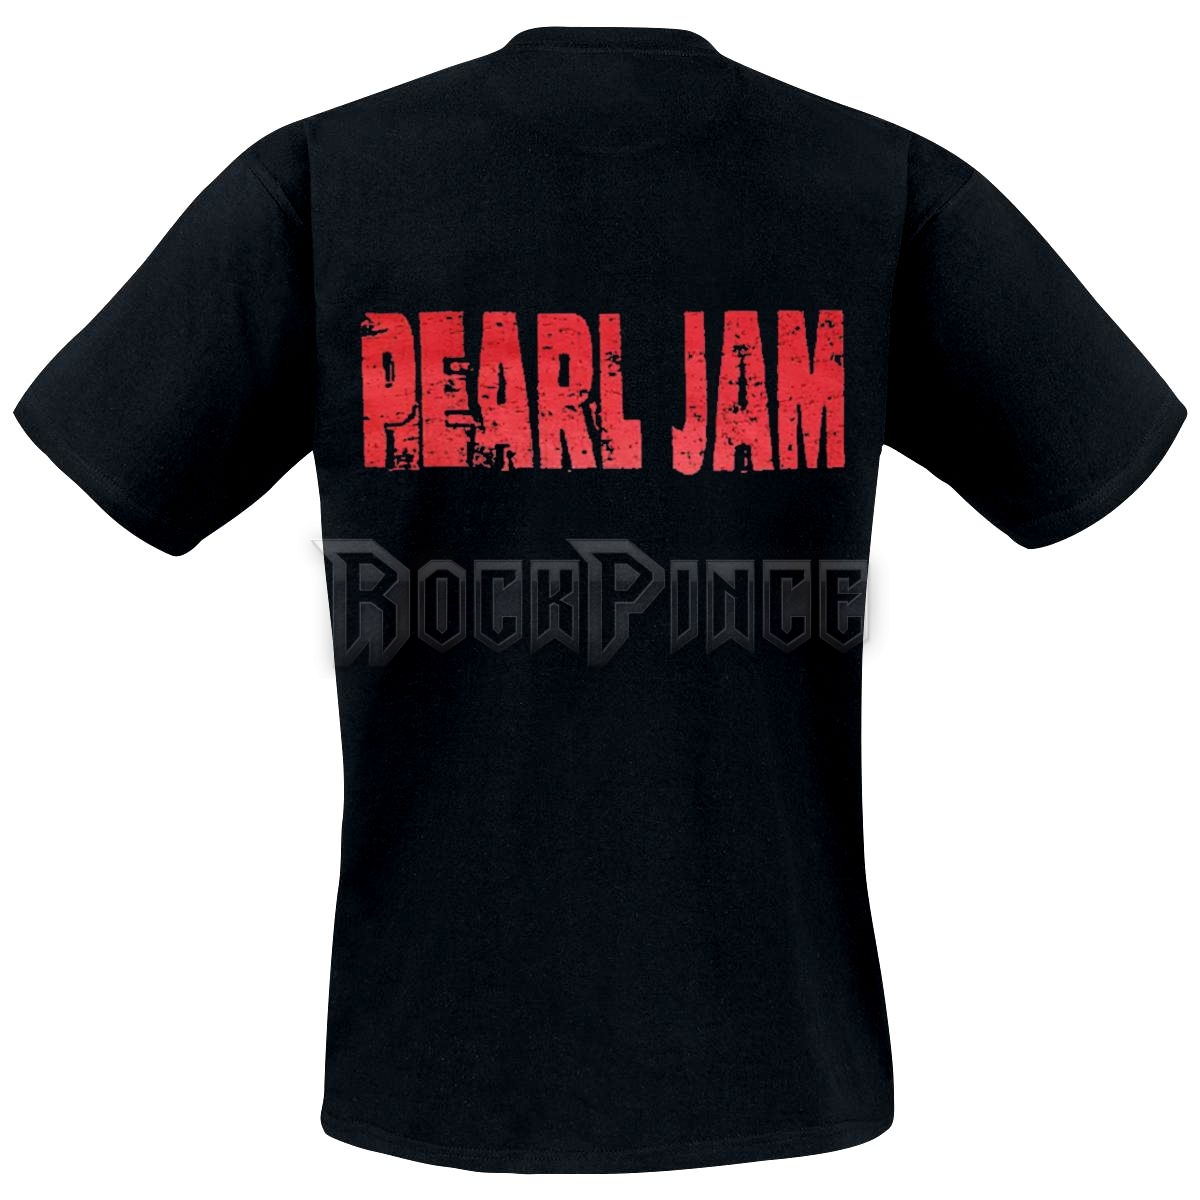 Pearl Jam - Don't Give UP - UNISEX PÓLÓ